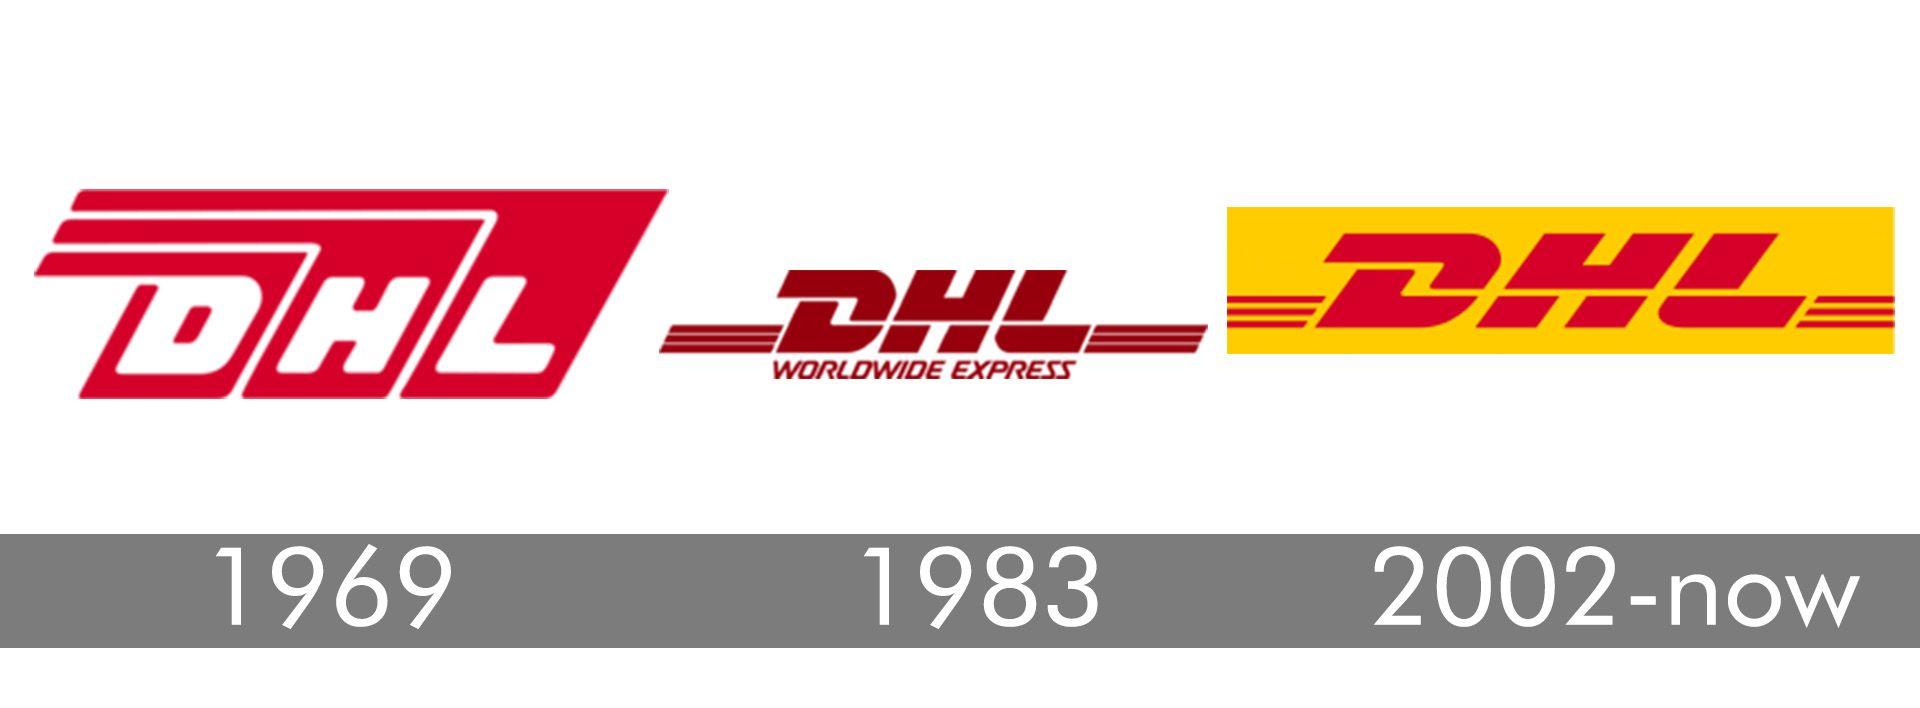 DHL Logo - DHL logo, symbol, meaning, History and Evolution